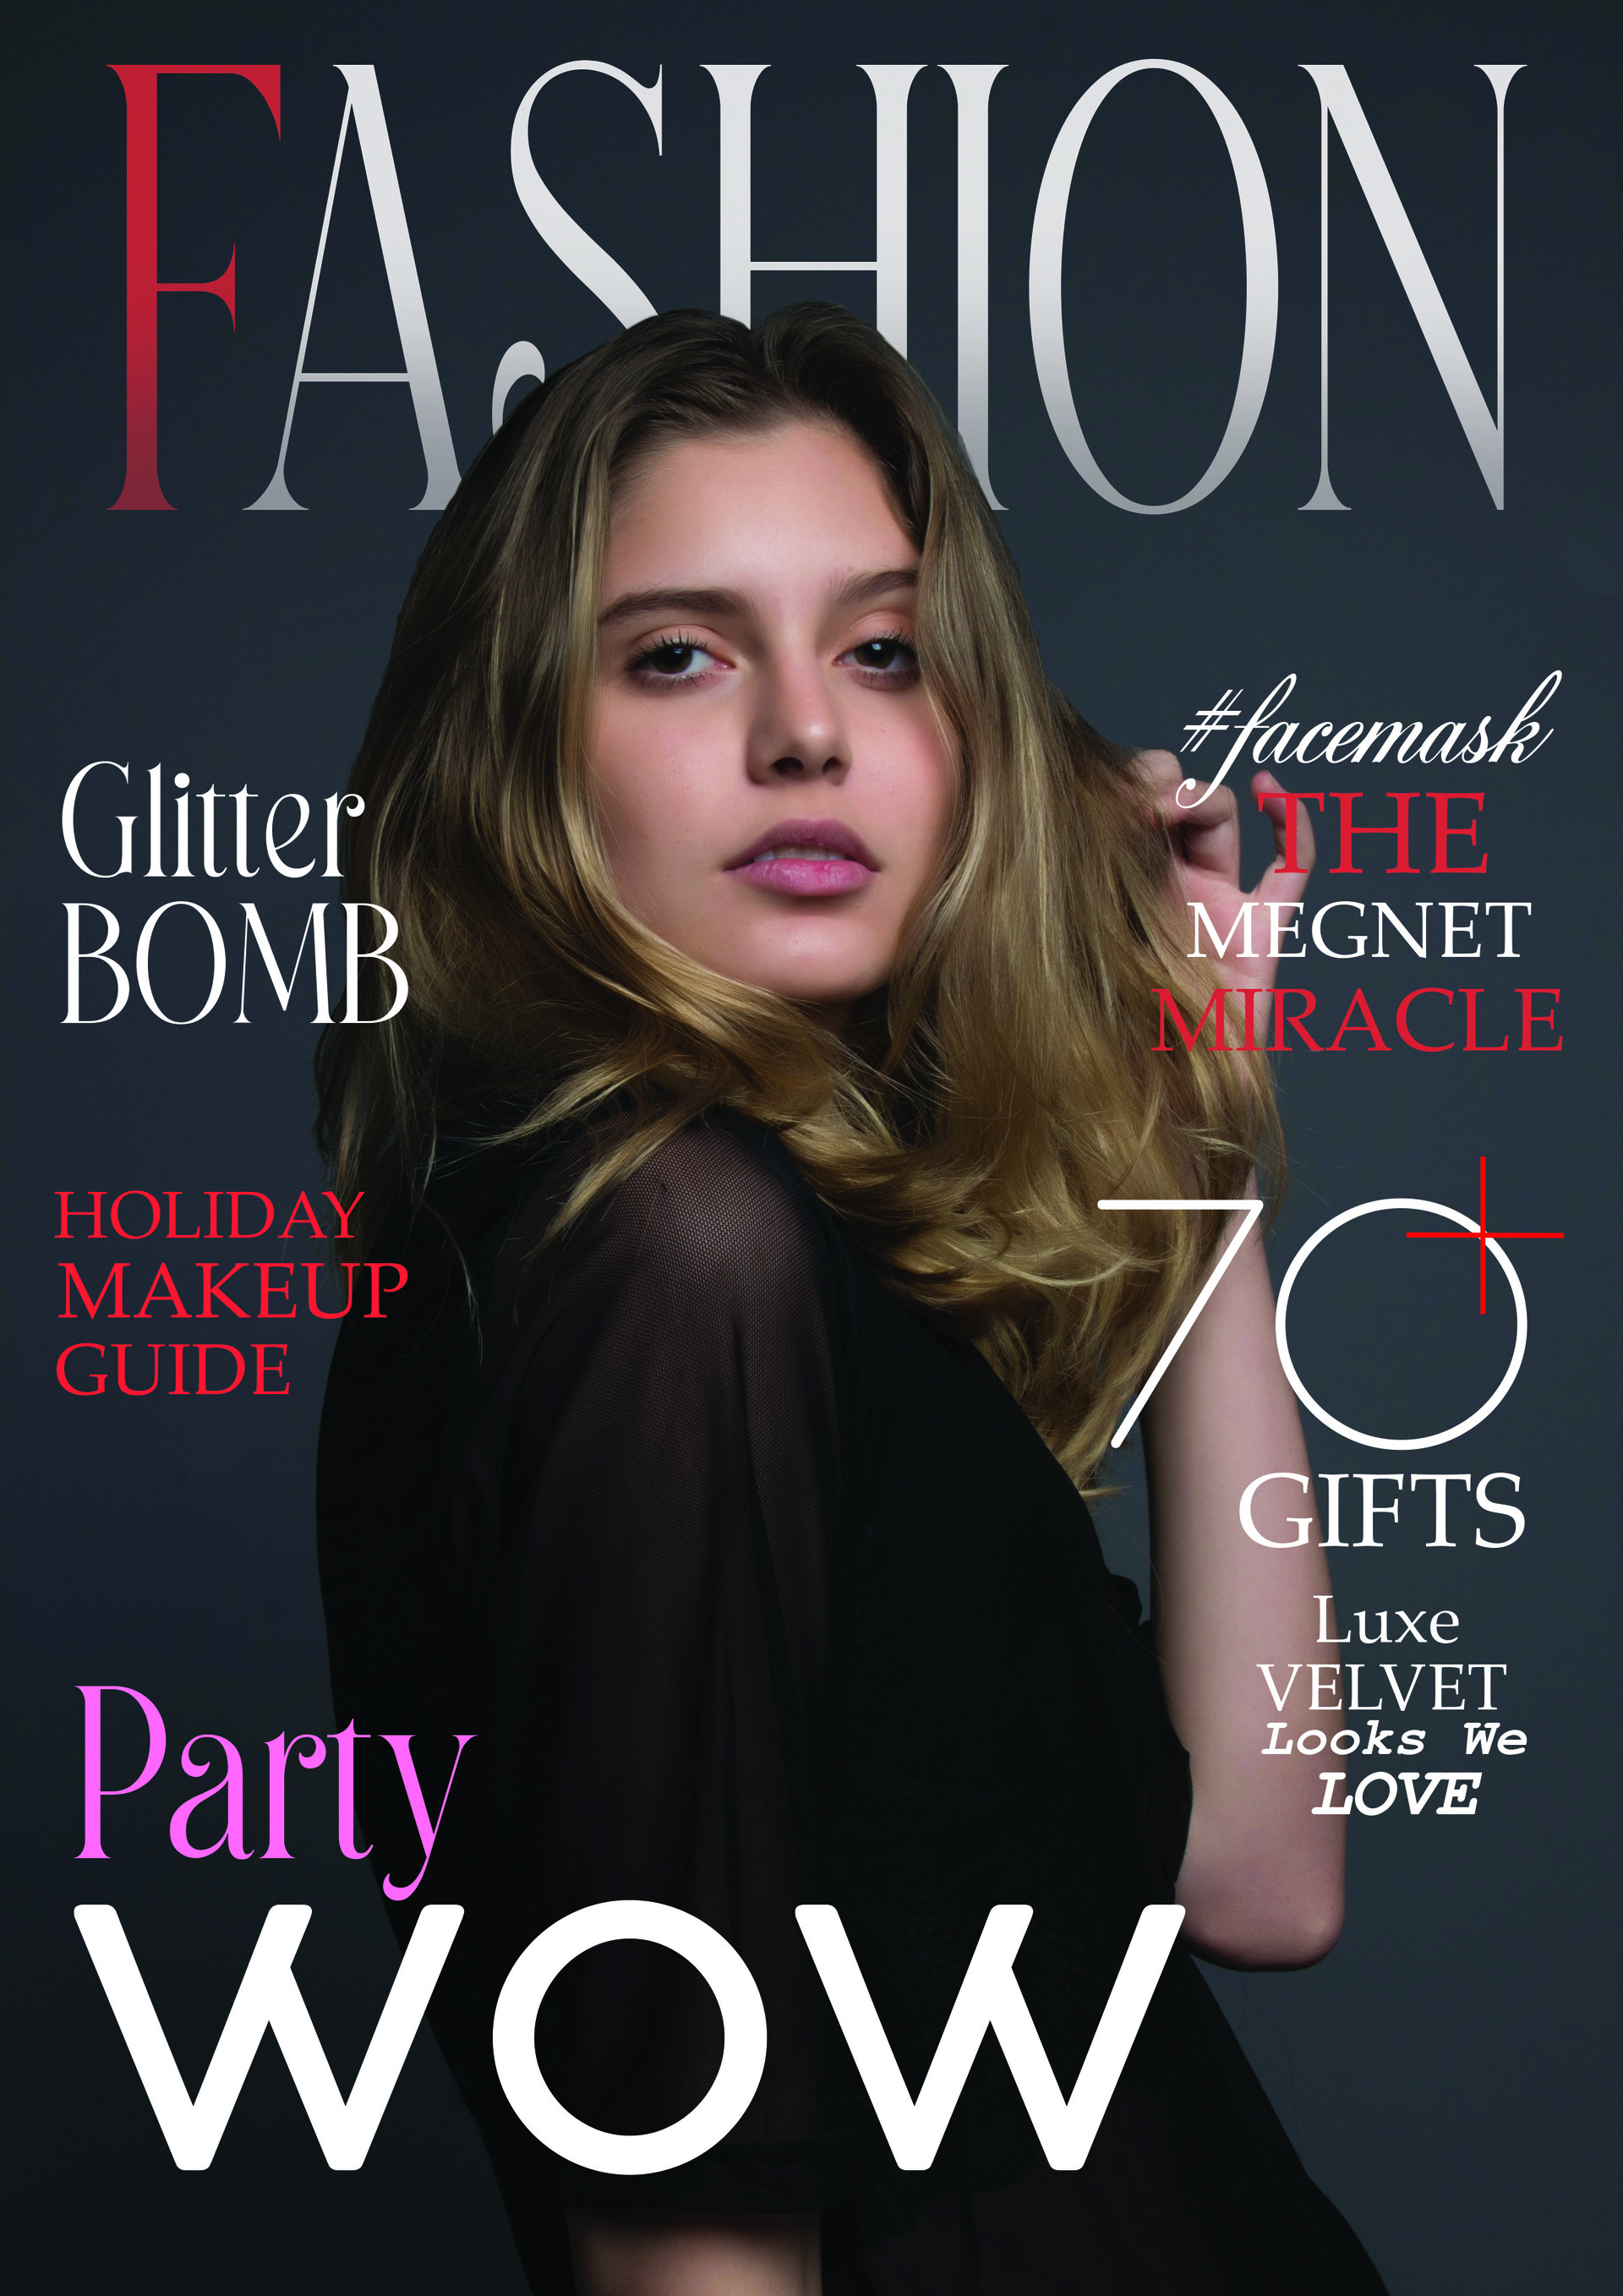 ArtStation - Magazine cover